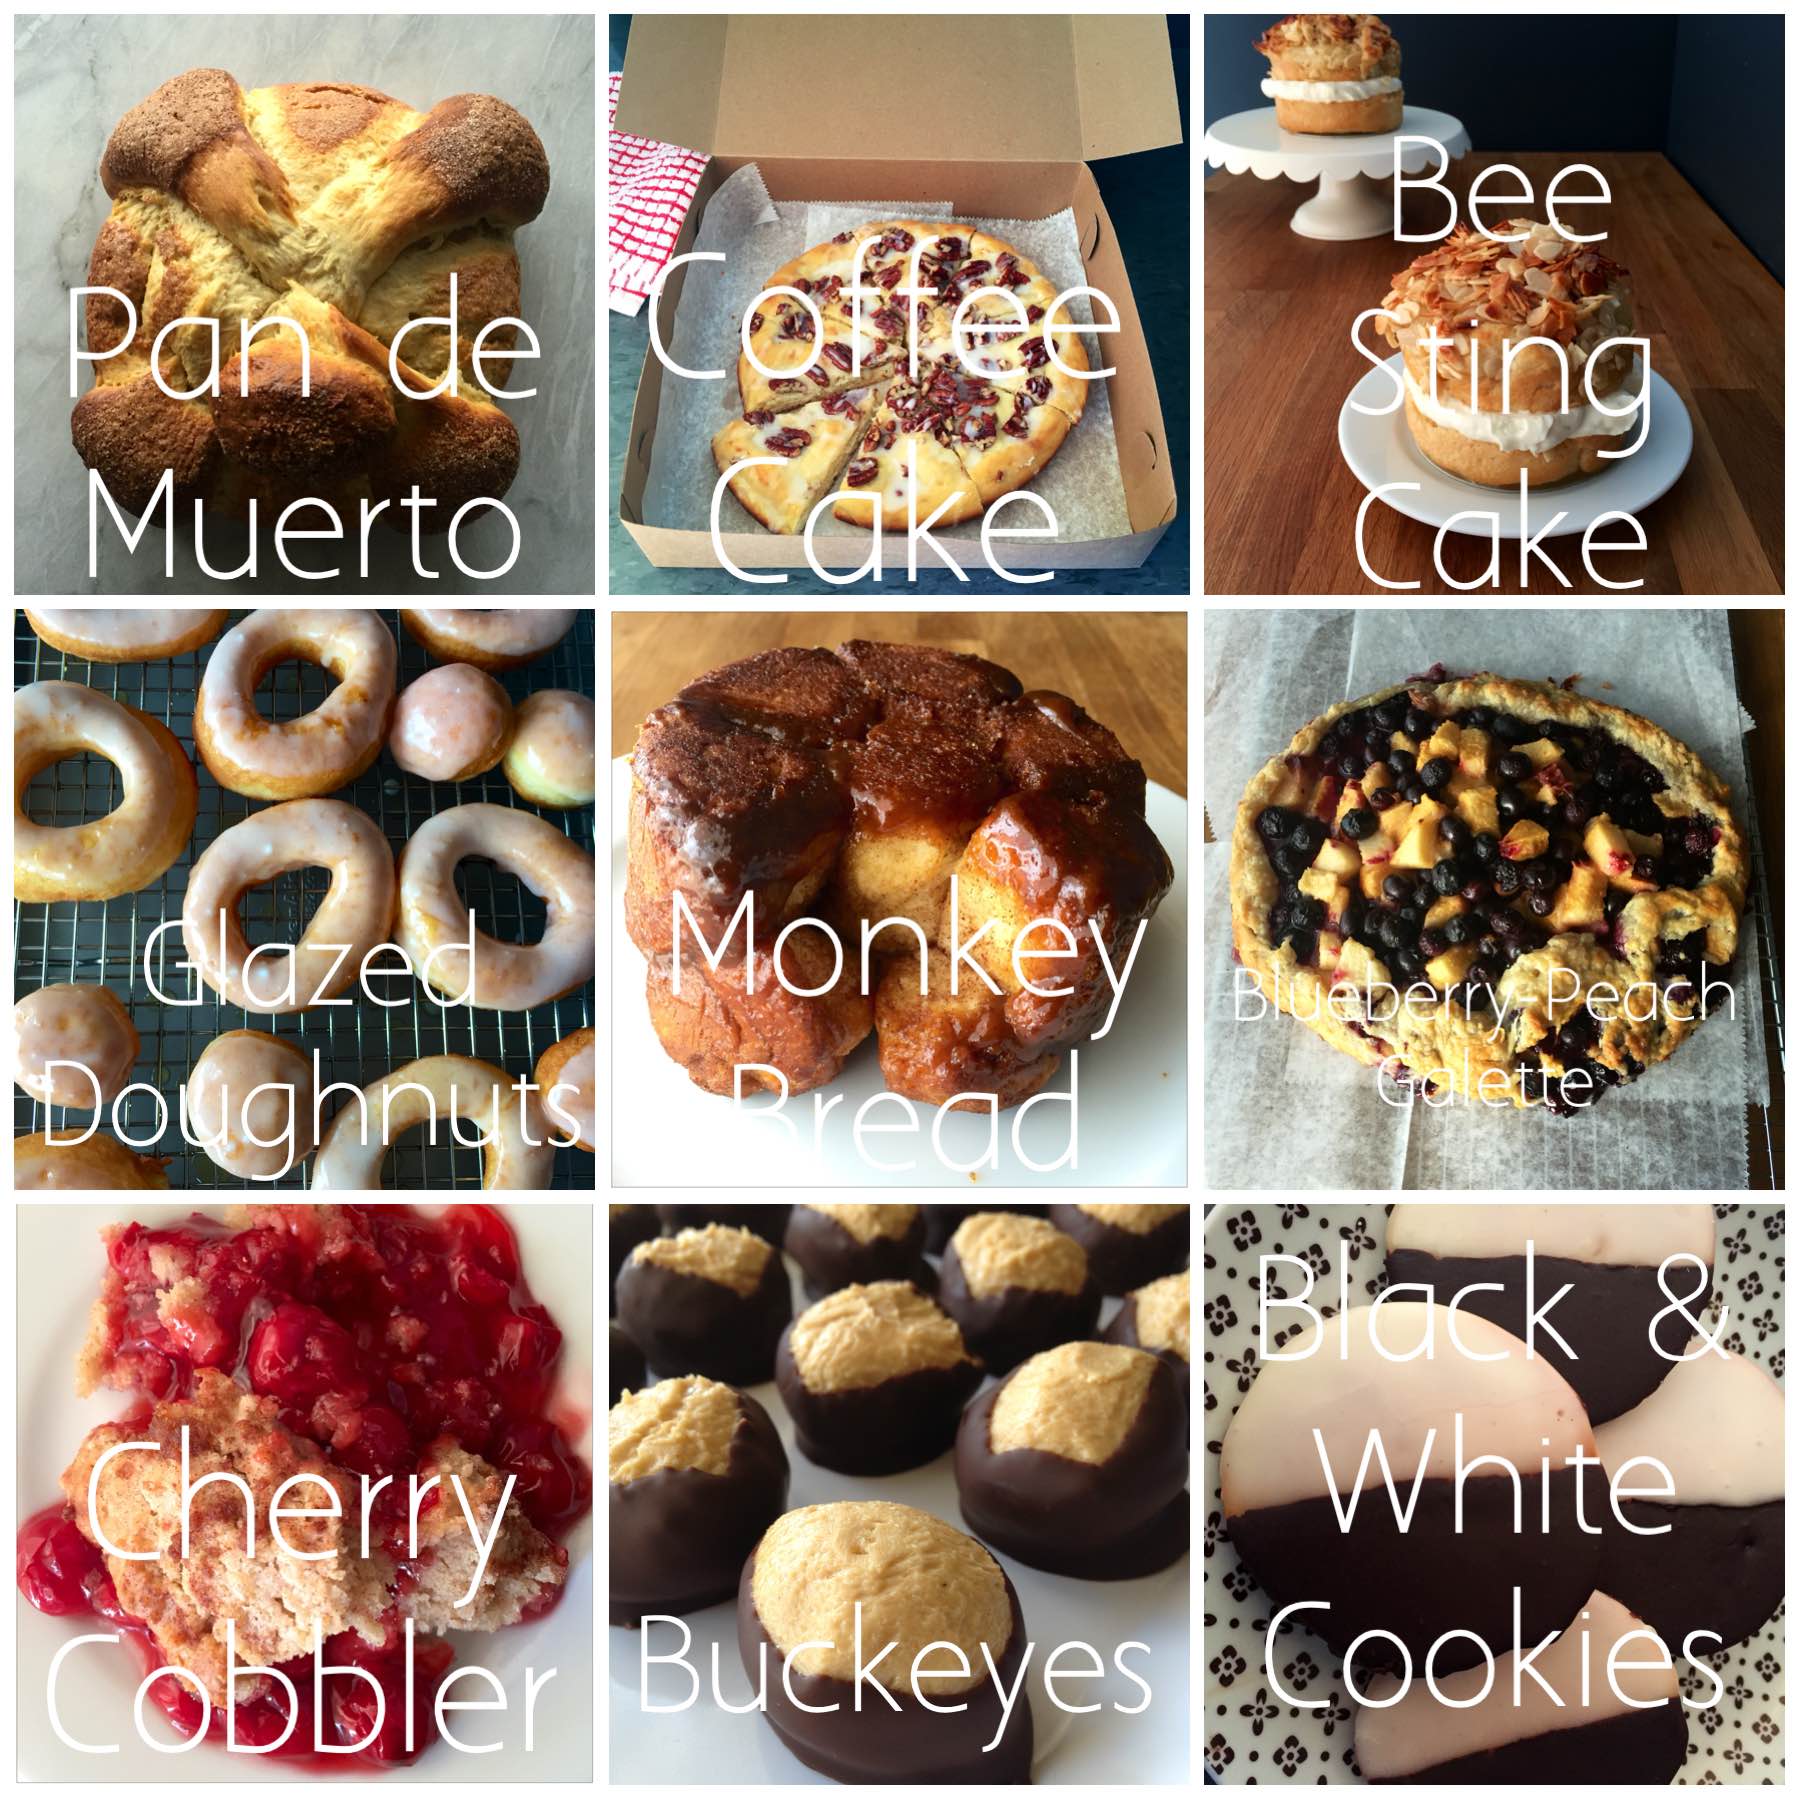 Black-and-white-cookies-monkey-bread-pan-de-muerto-glazed-doughnuts-buckeyes-galette-bee-sting-cake-cherry-cobbler-coffee-cake